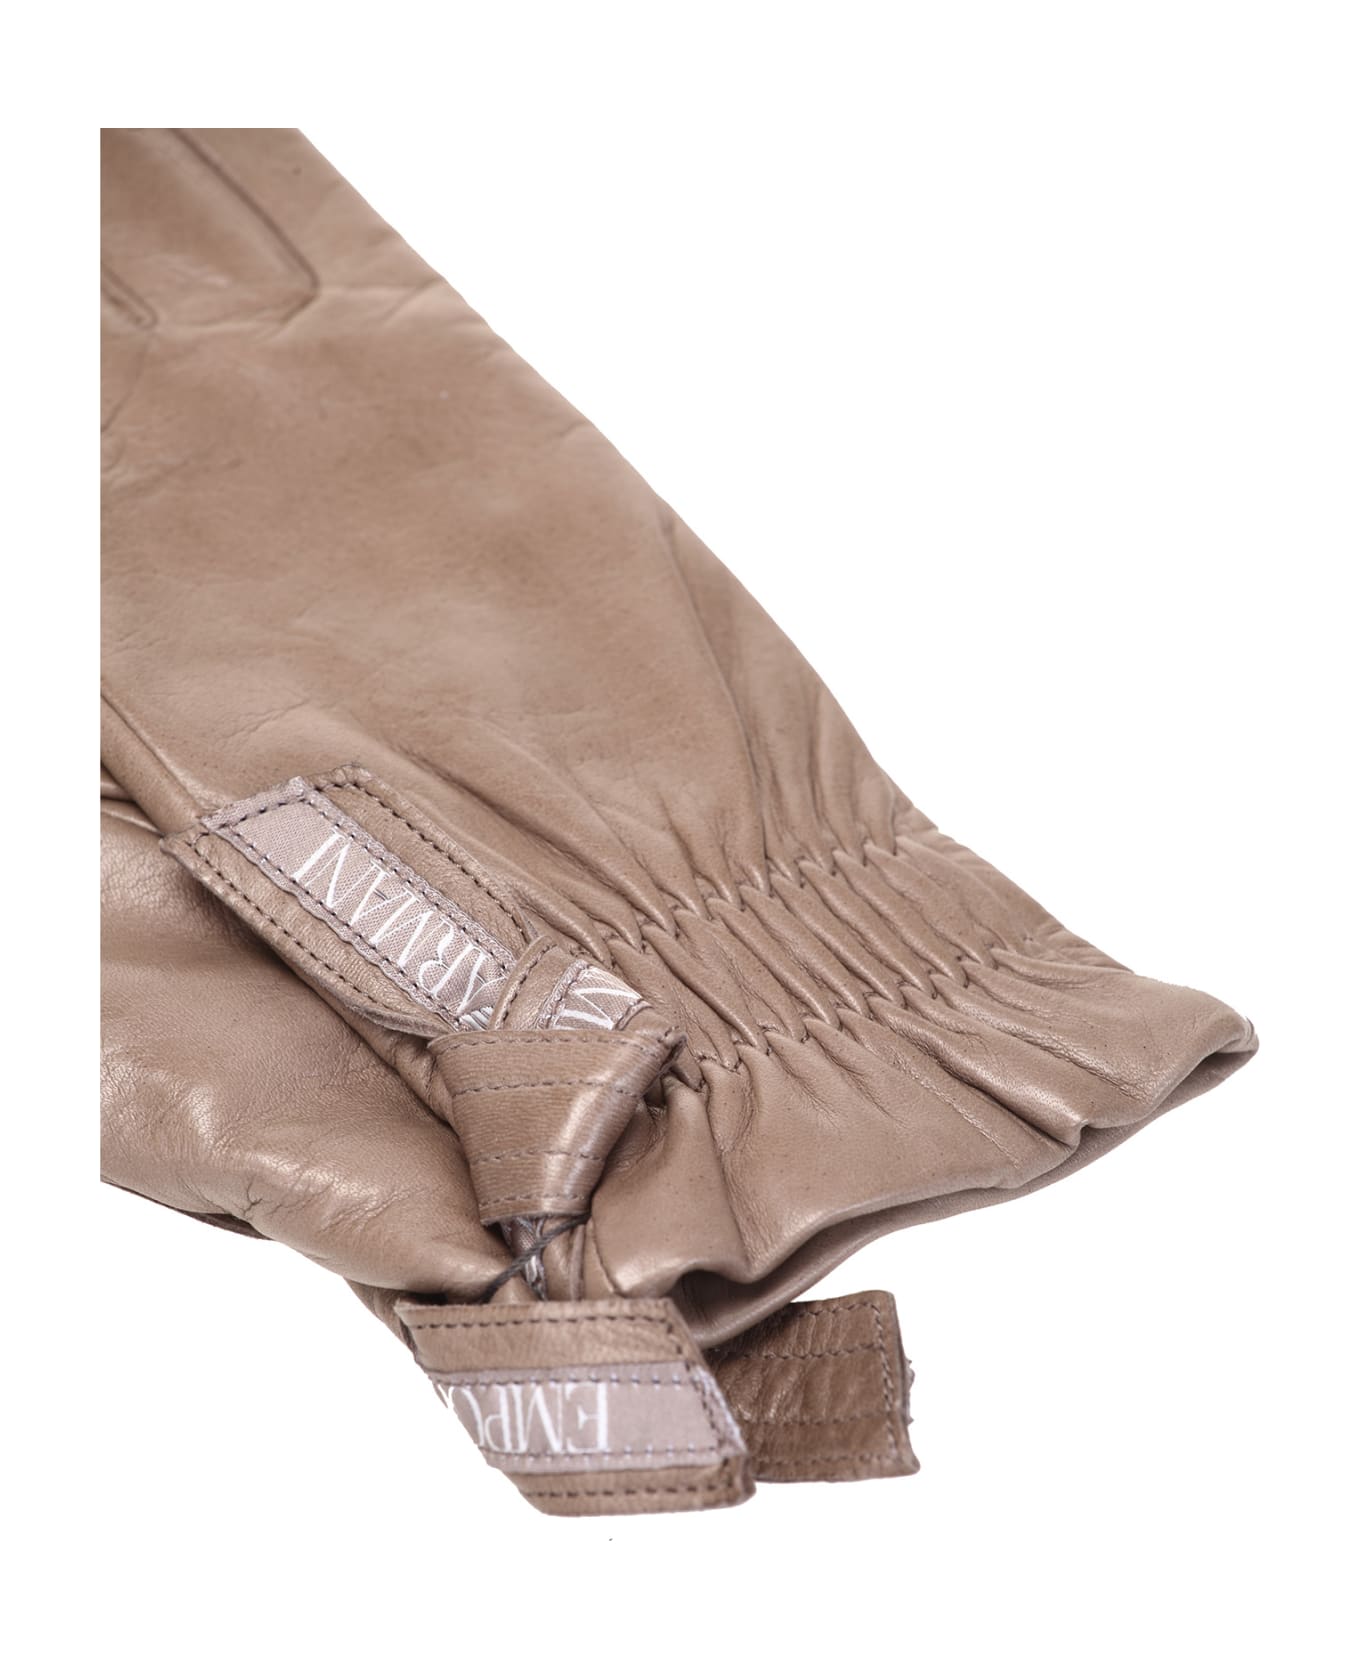 Emporio Armani Gloves Dove Grey - Dove Grey